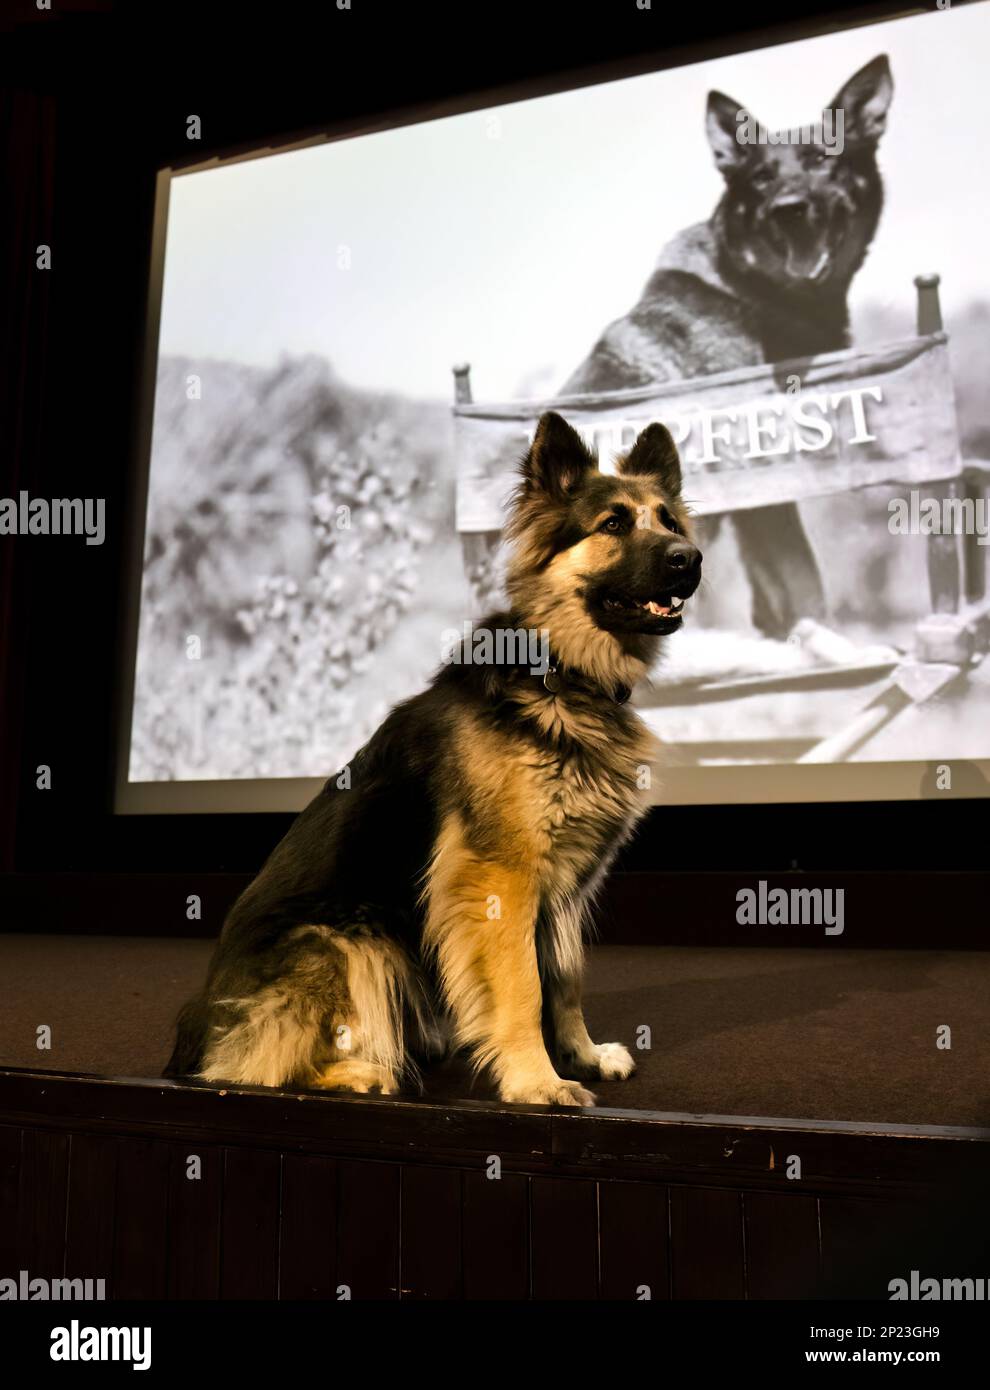 Rin TN Tin German Shepherd ou Alsatian Dog look-Ase at HippFest Launch, Hippodrome Cinema, Bo'Ness, Écosse, Royaume-Uni Banque D'Images